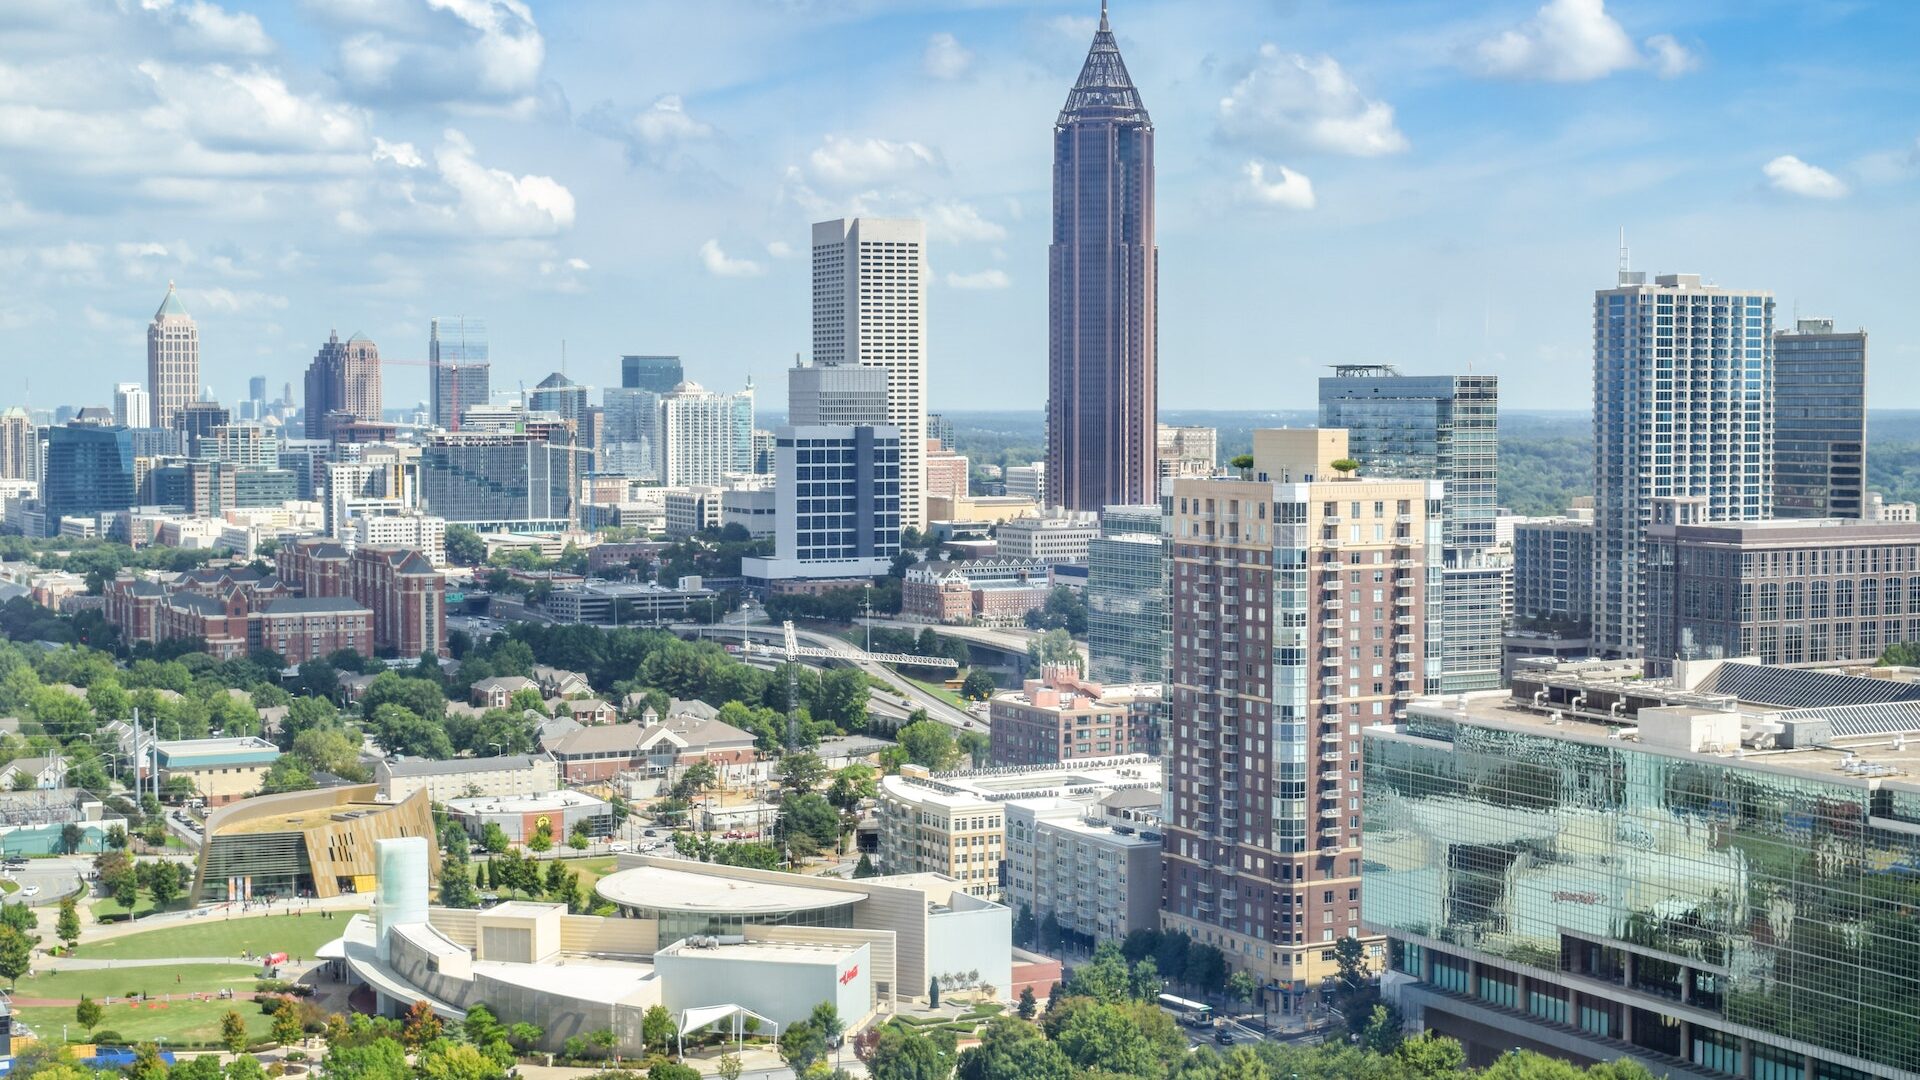 Atlanta, GA skyline